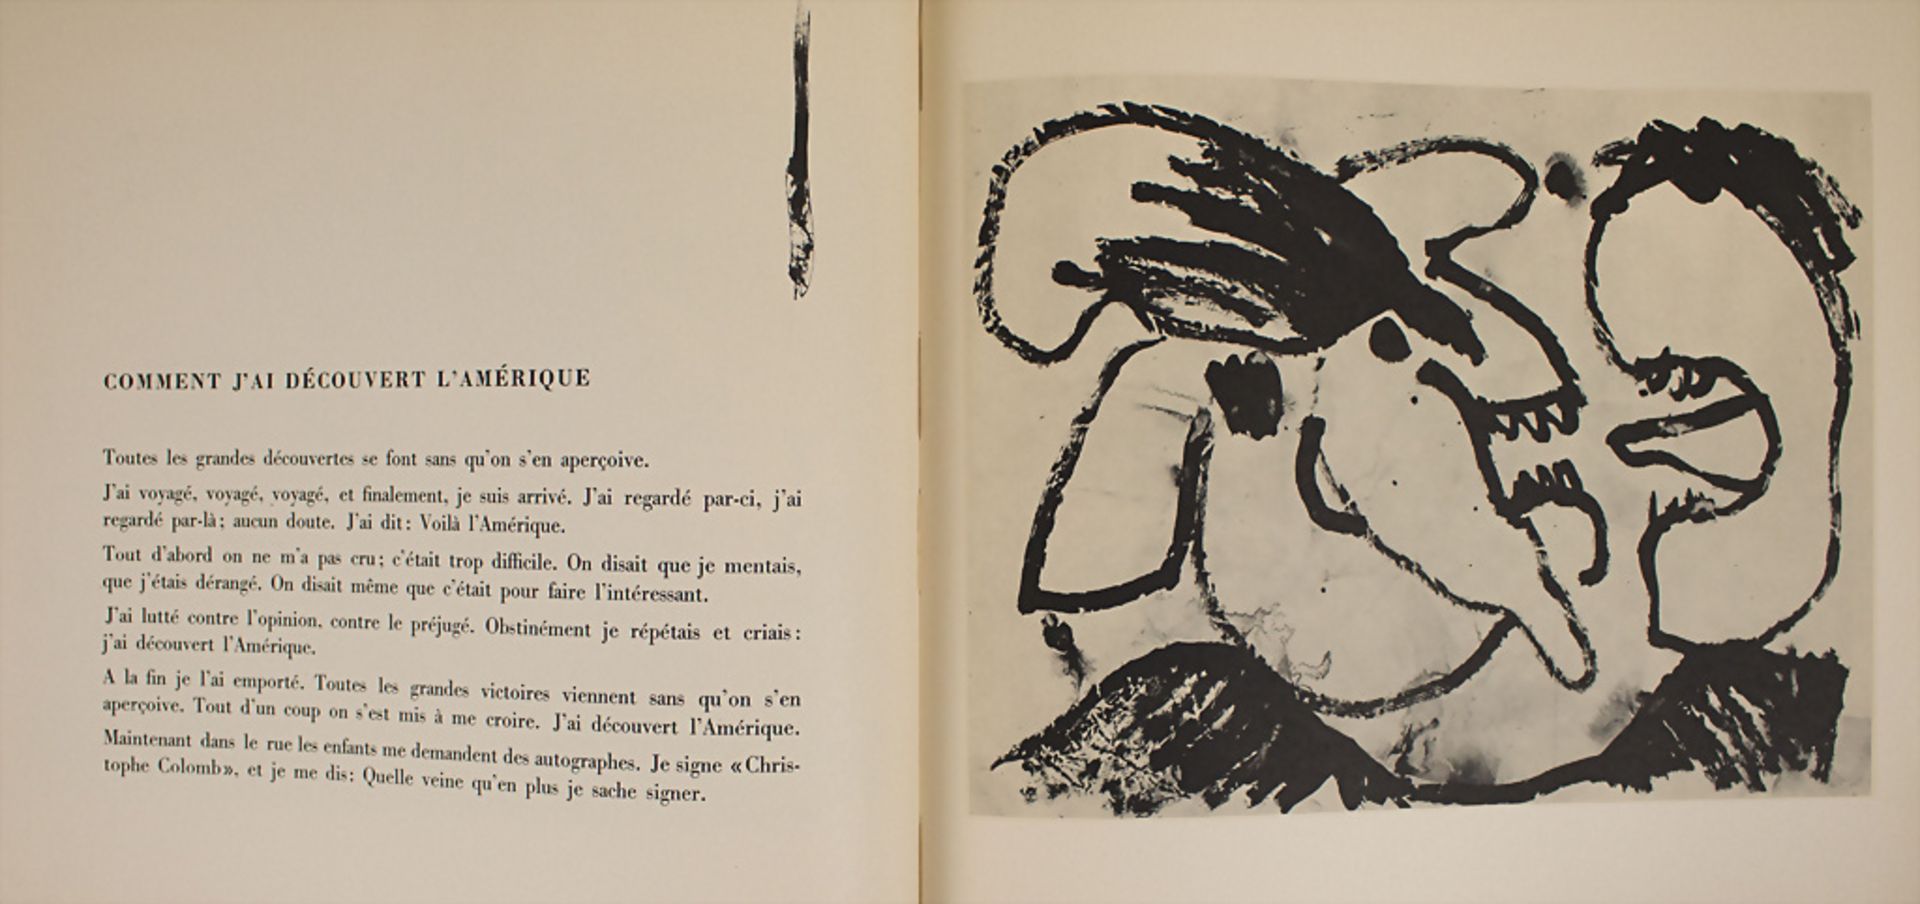 Pierre Alechinsky, Amos Kenan: Les Tireurs de Langue, Turin, 1974 - Image 5 of 6